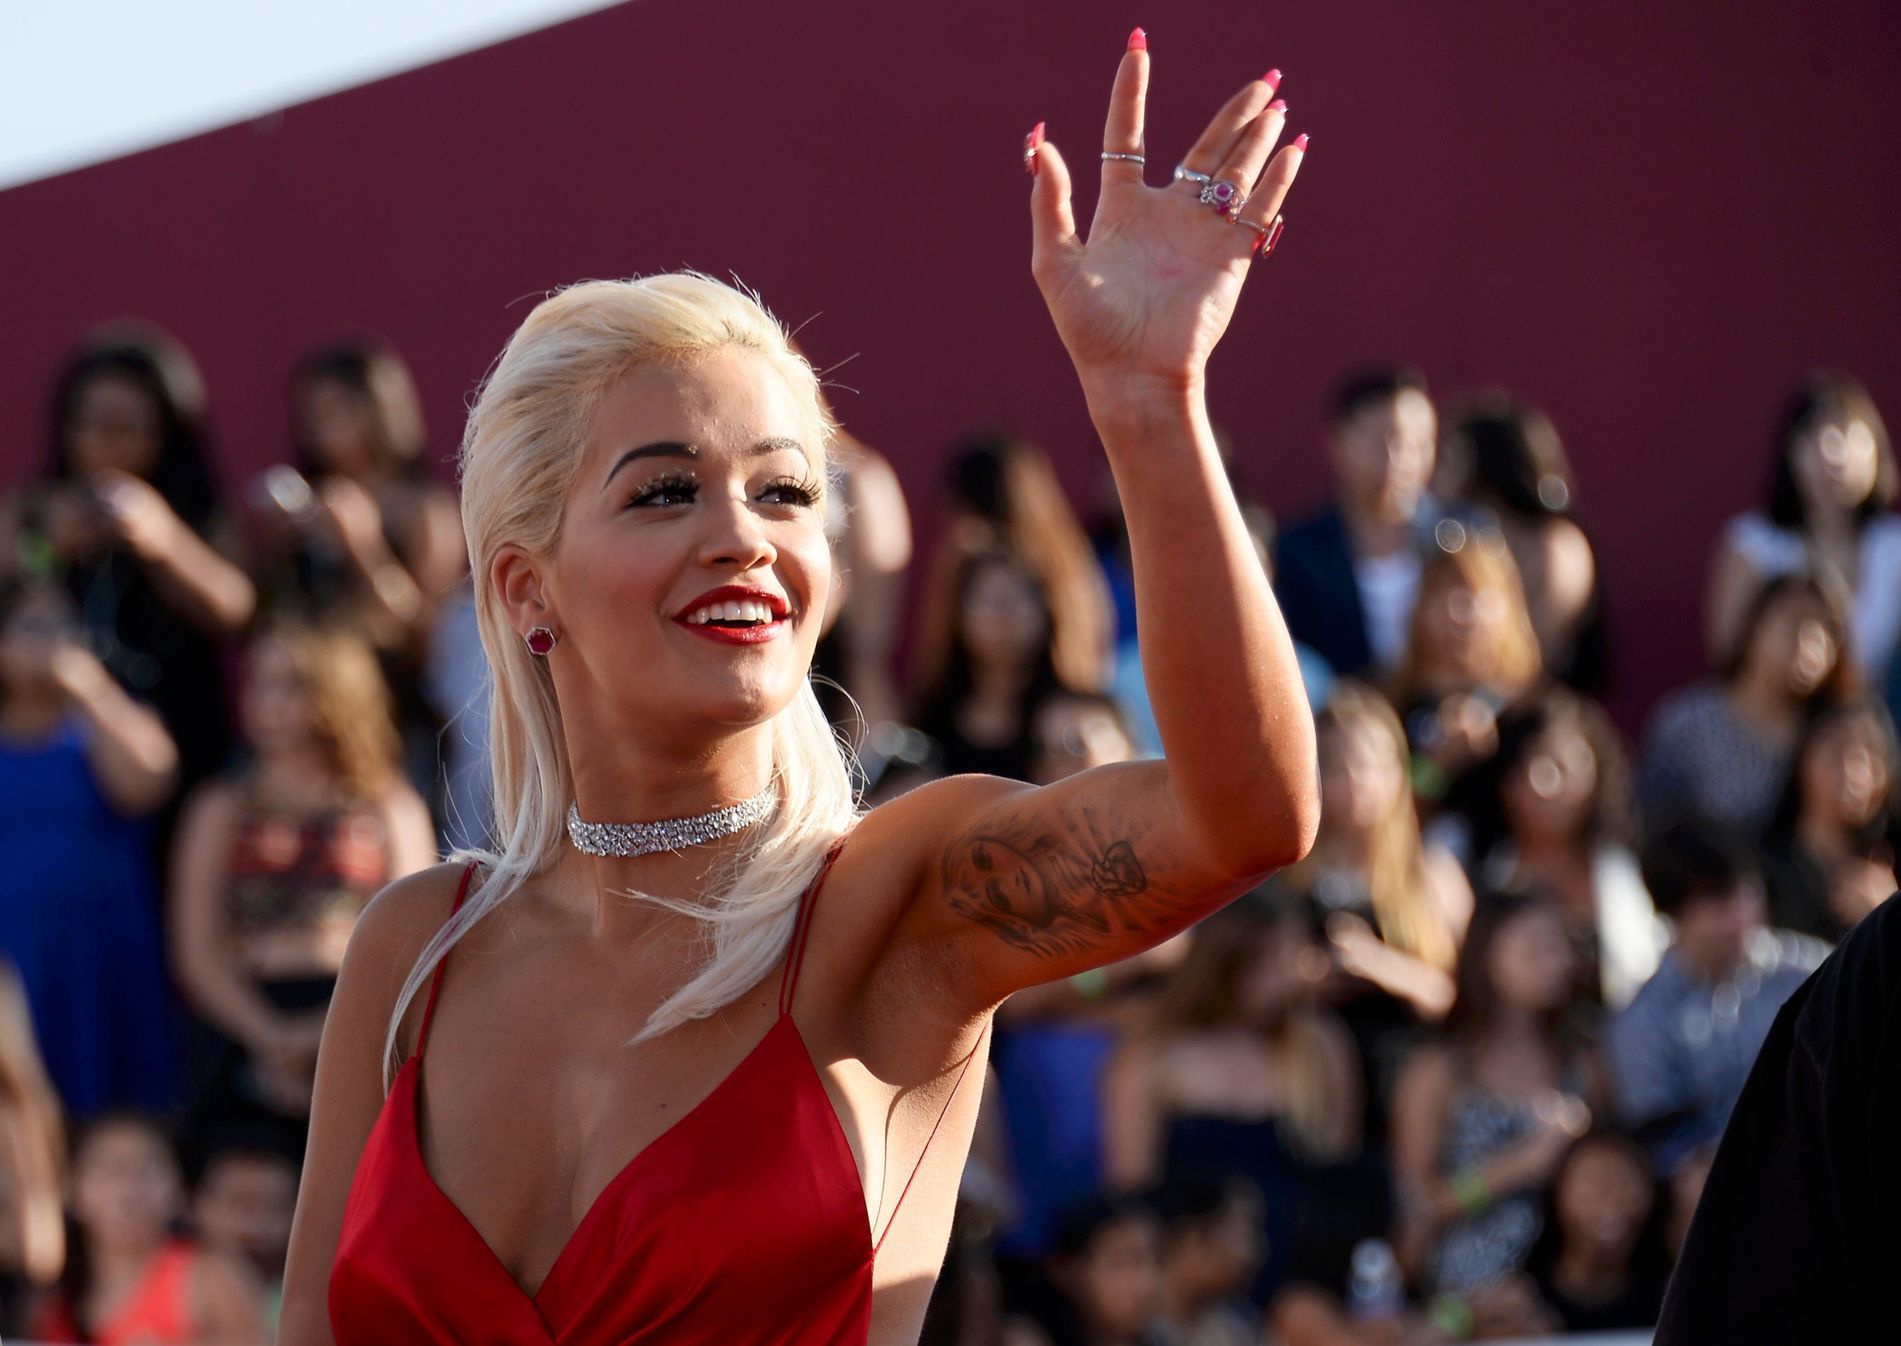 Rita Ora arrives at the 2014 MTV Music Video Awards in Inglewood